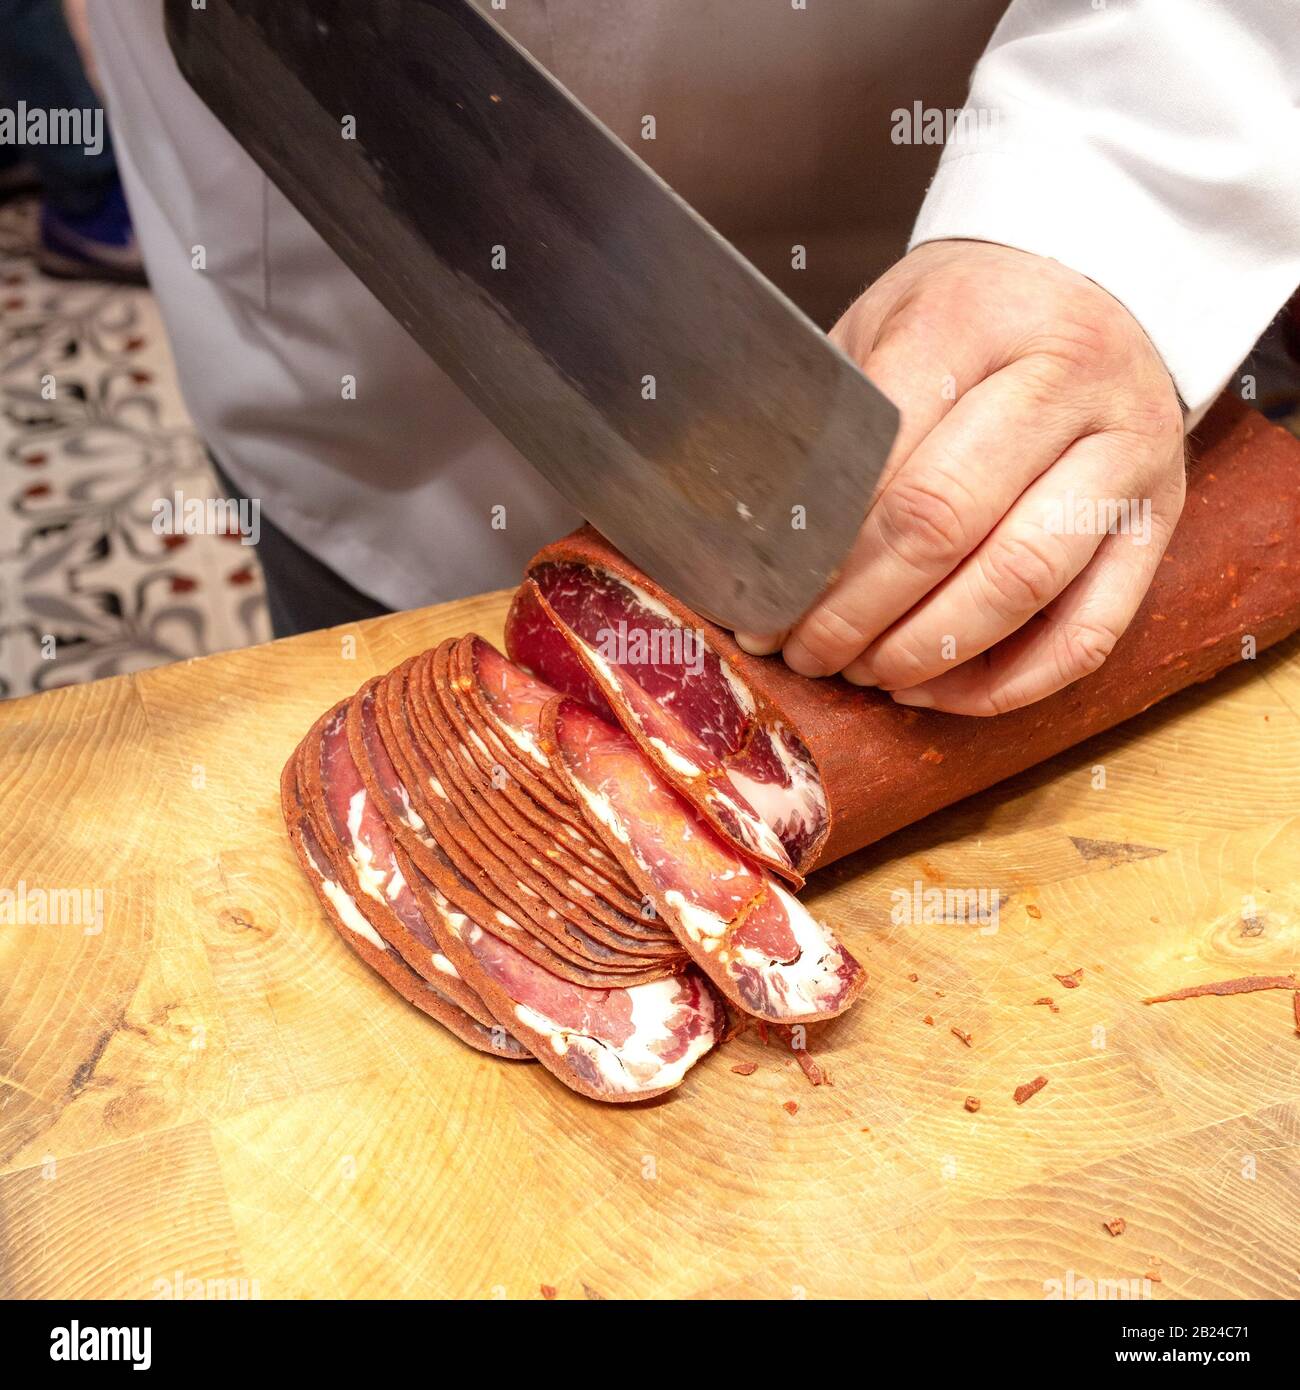 A Vendor slices bacon to his client. Egyptian Bazaar, Istanbul, Turkey. Stock Photo